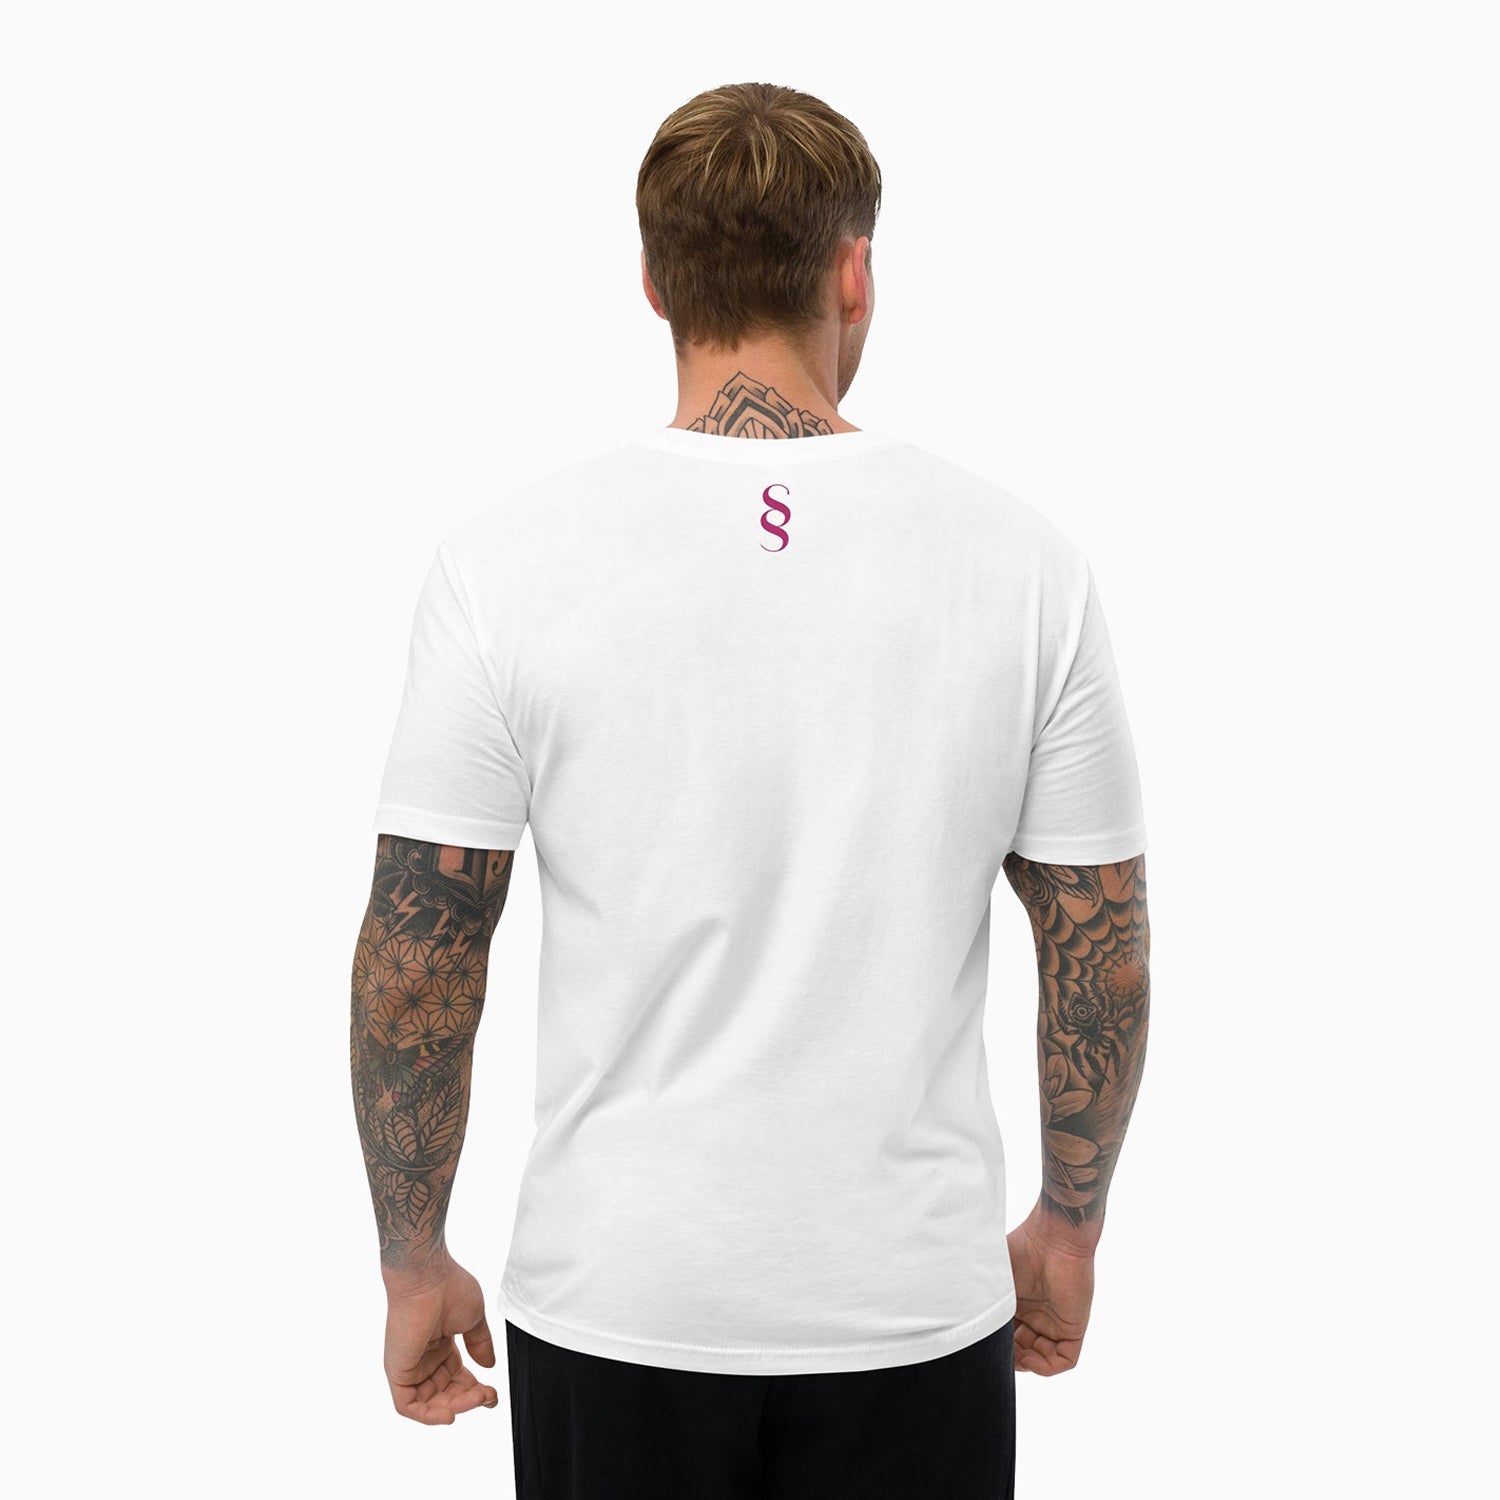 bob-marley-design-printed-crew-neck-white-t-shirt-for-men-st107-100